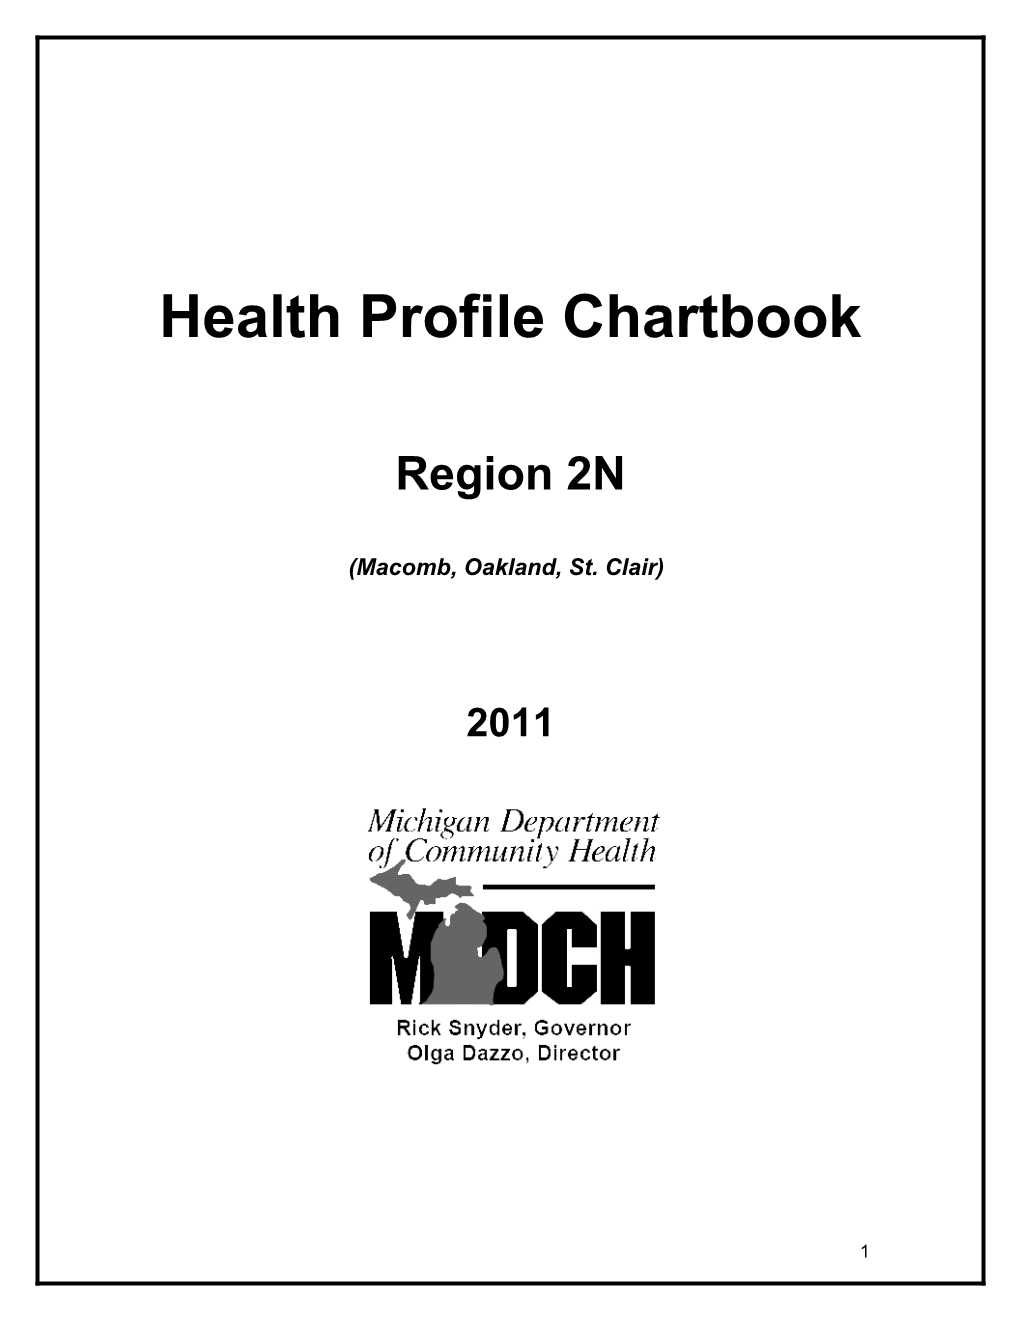 Michigan S Health Profile Chartbook